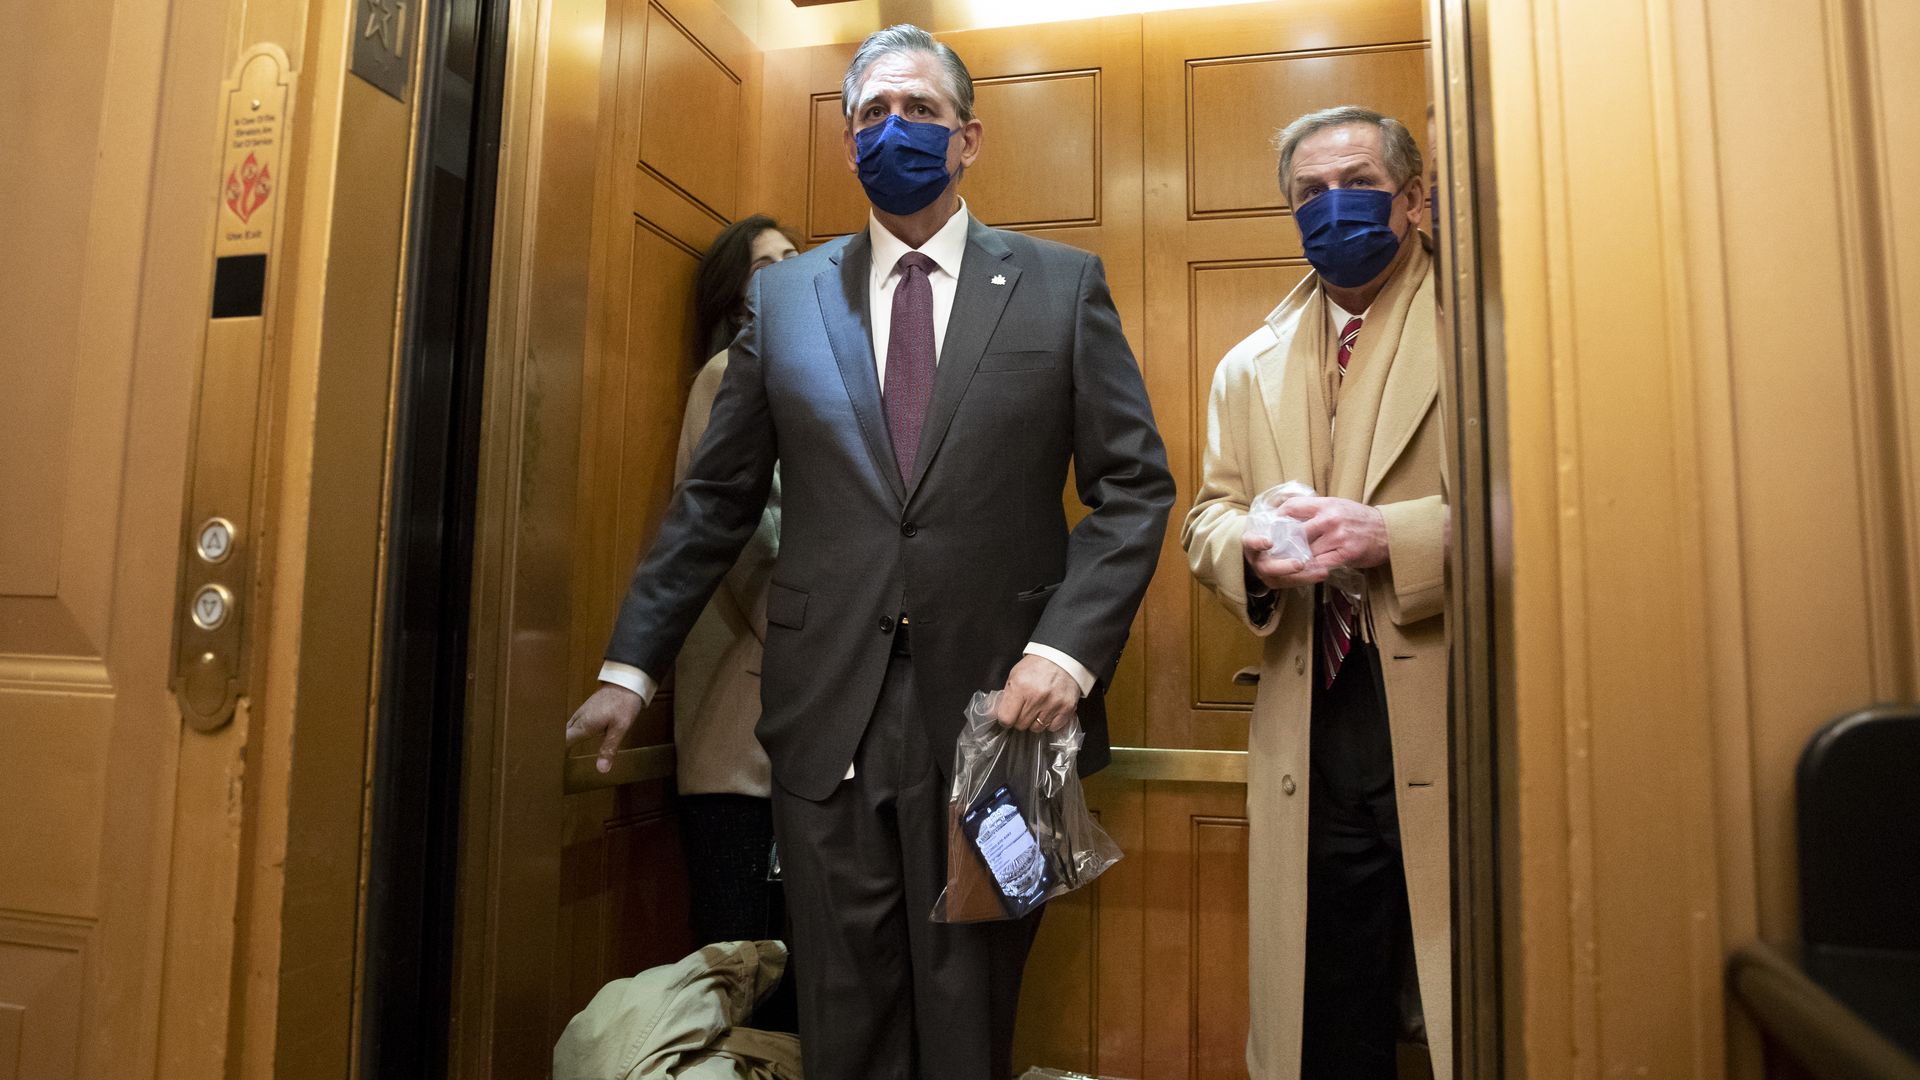 Members of former President Trump's impeachment defense team is seen on a Senate elevator.